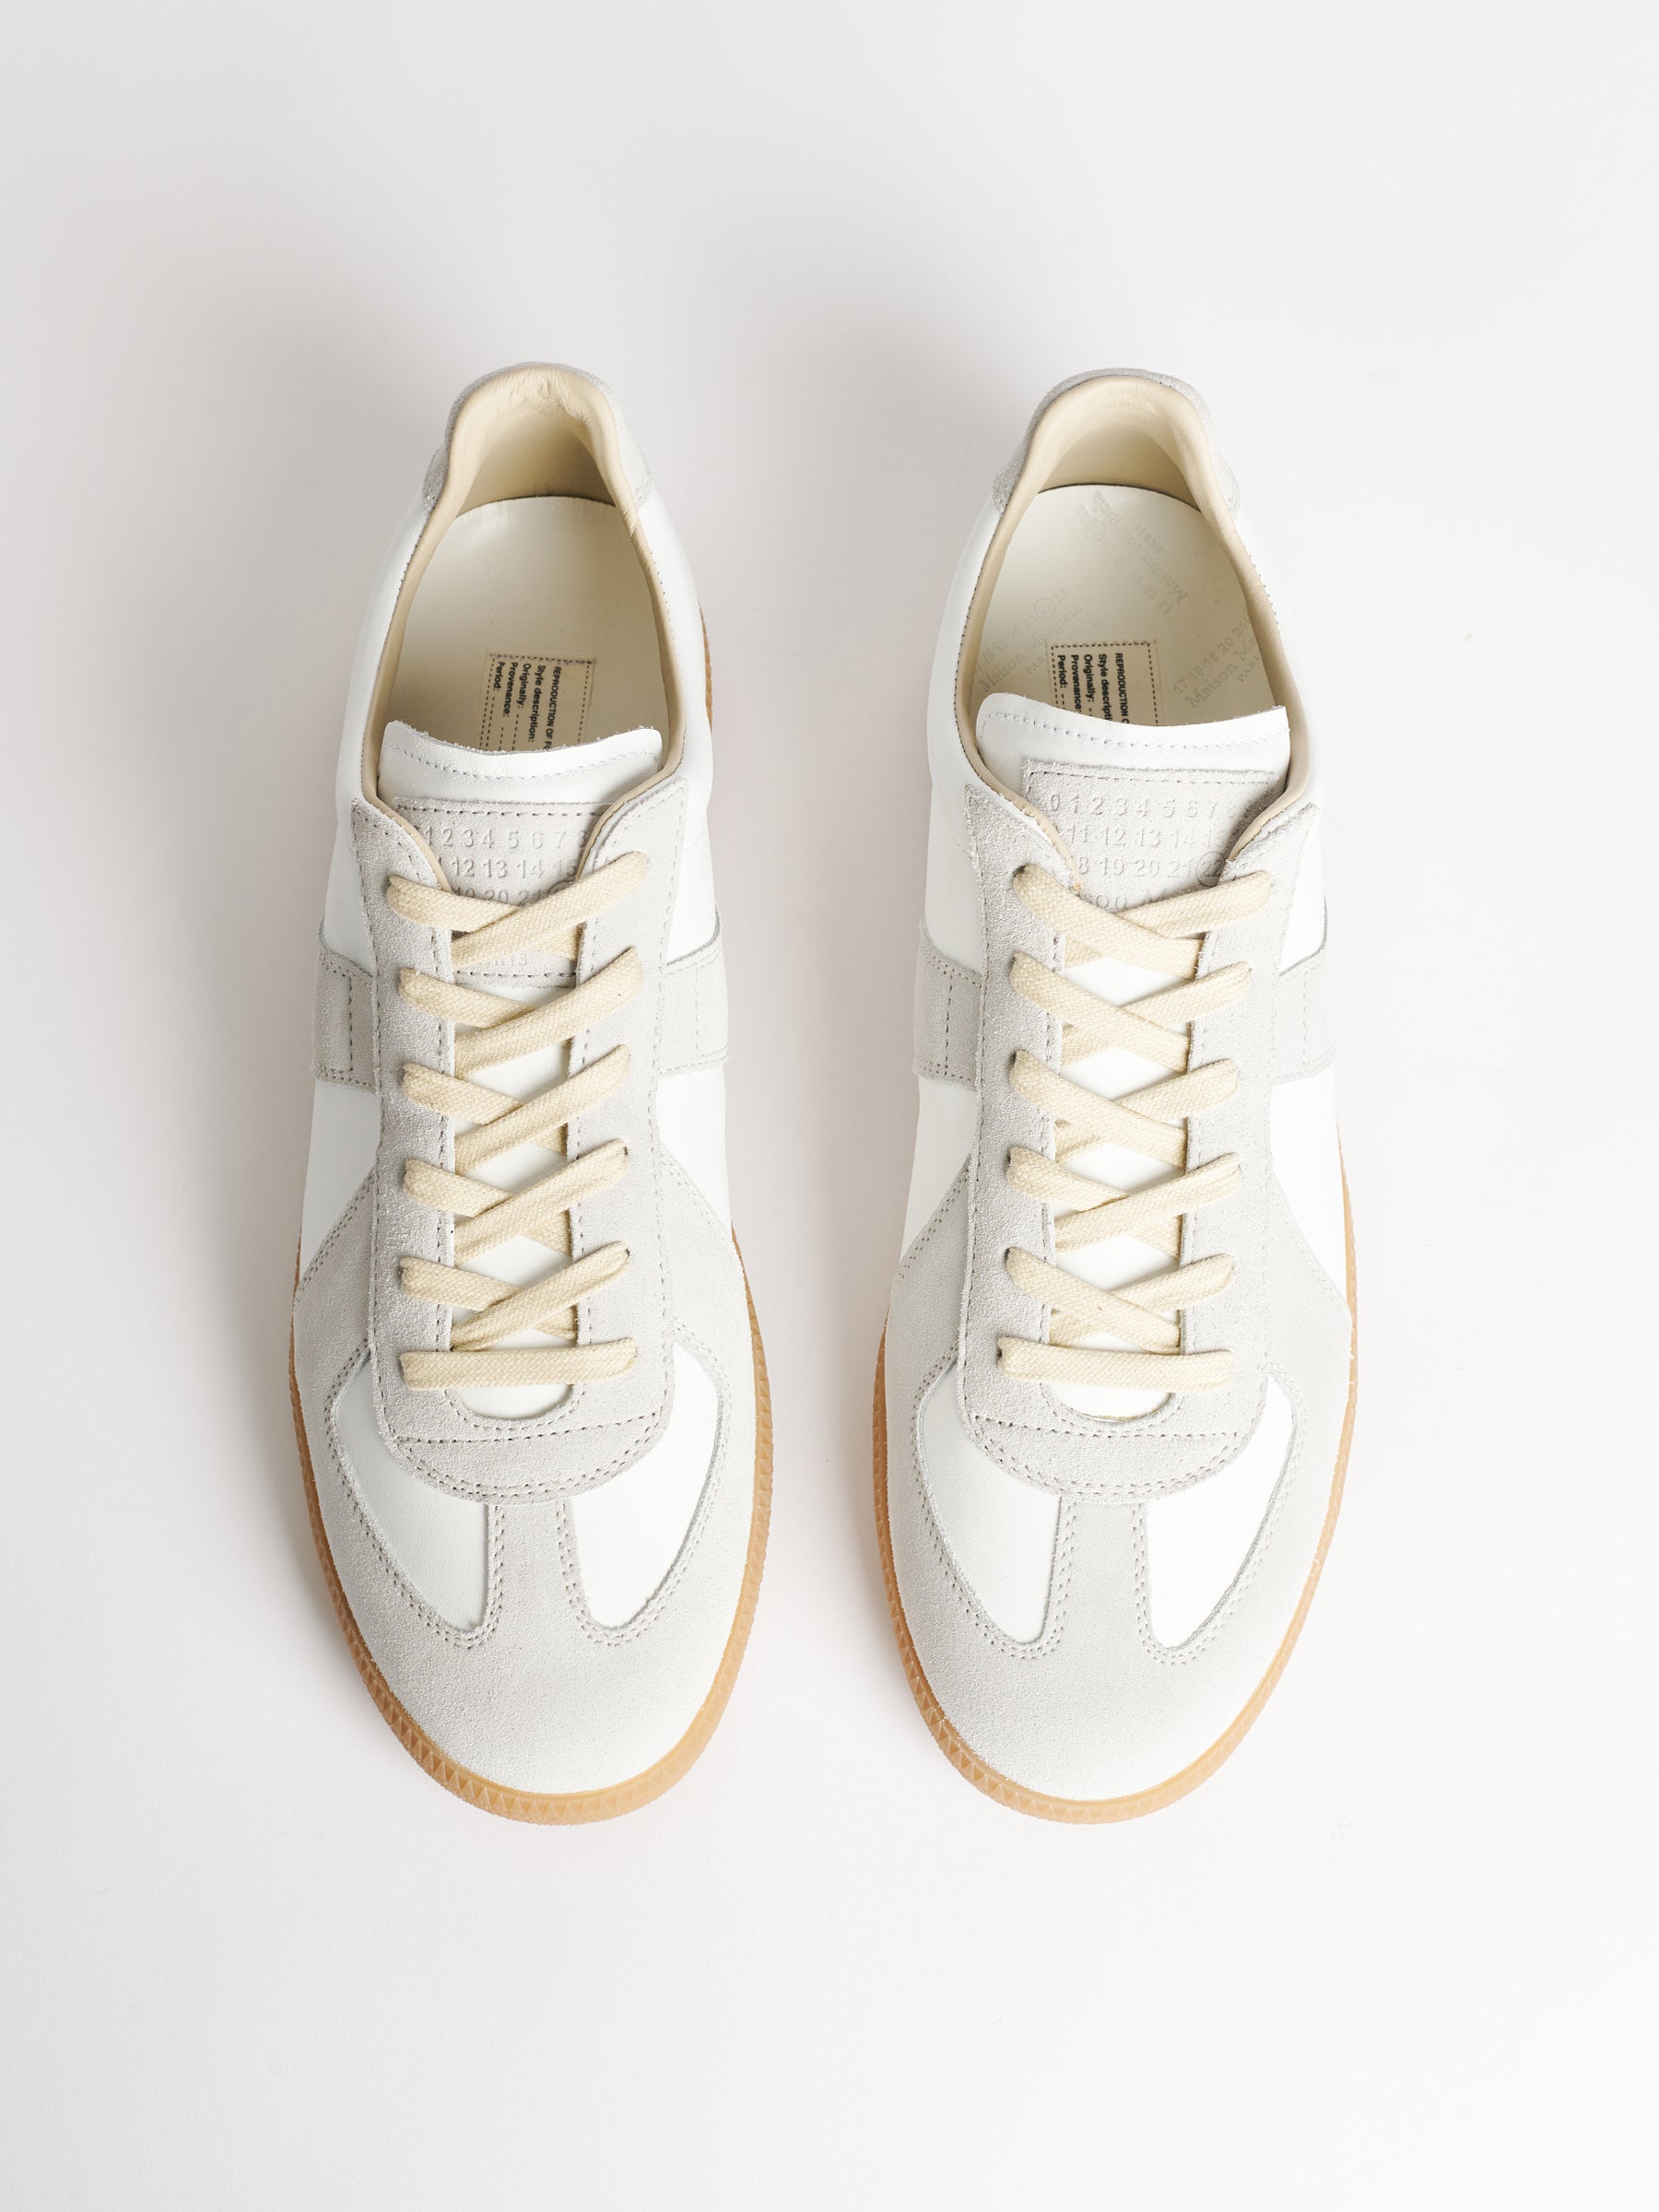 Maison Margiela Replica Low Top Sneakers White